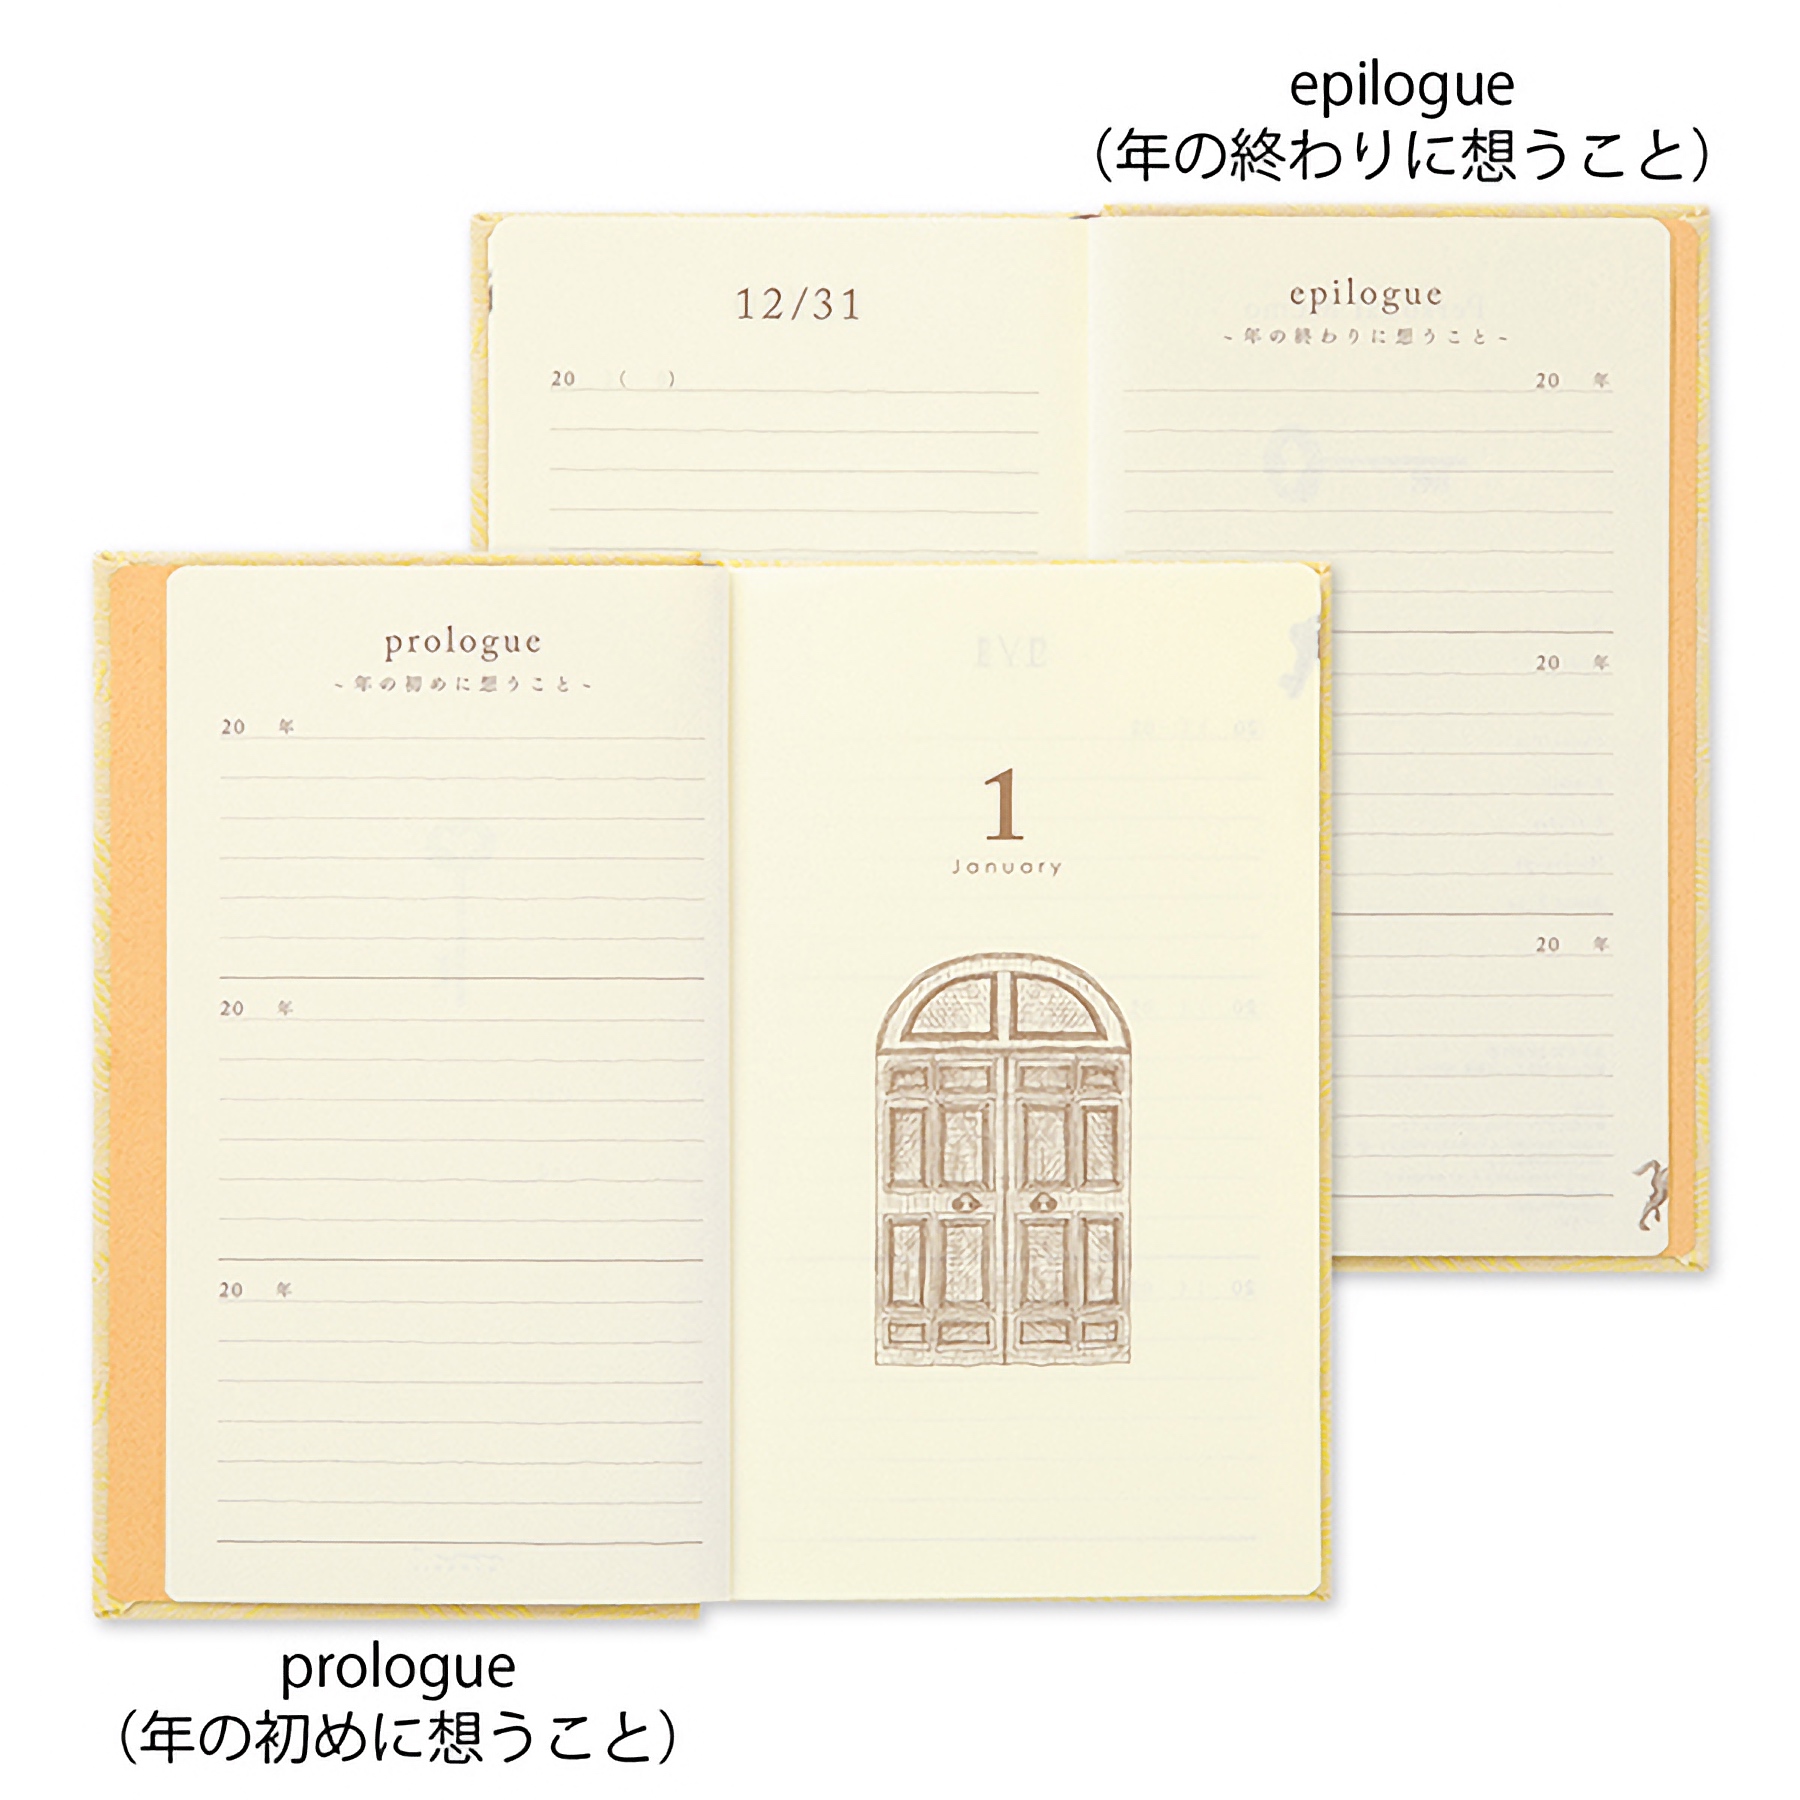 Midori 3 Years Diary Gate Kyo-ori Yellow Limited Edition